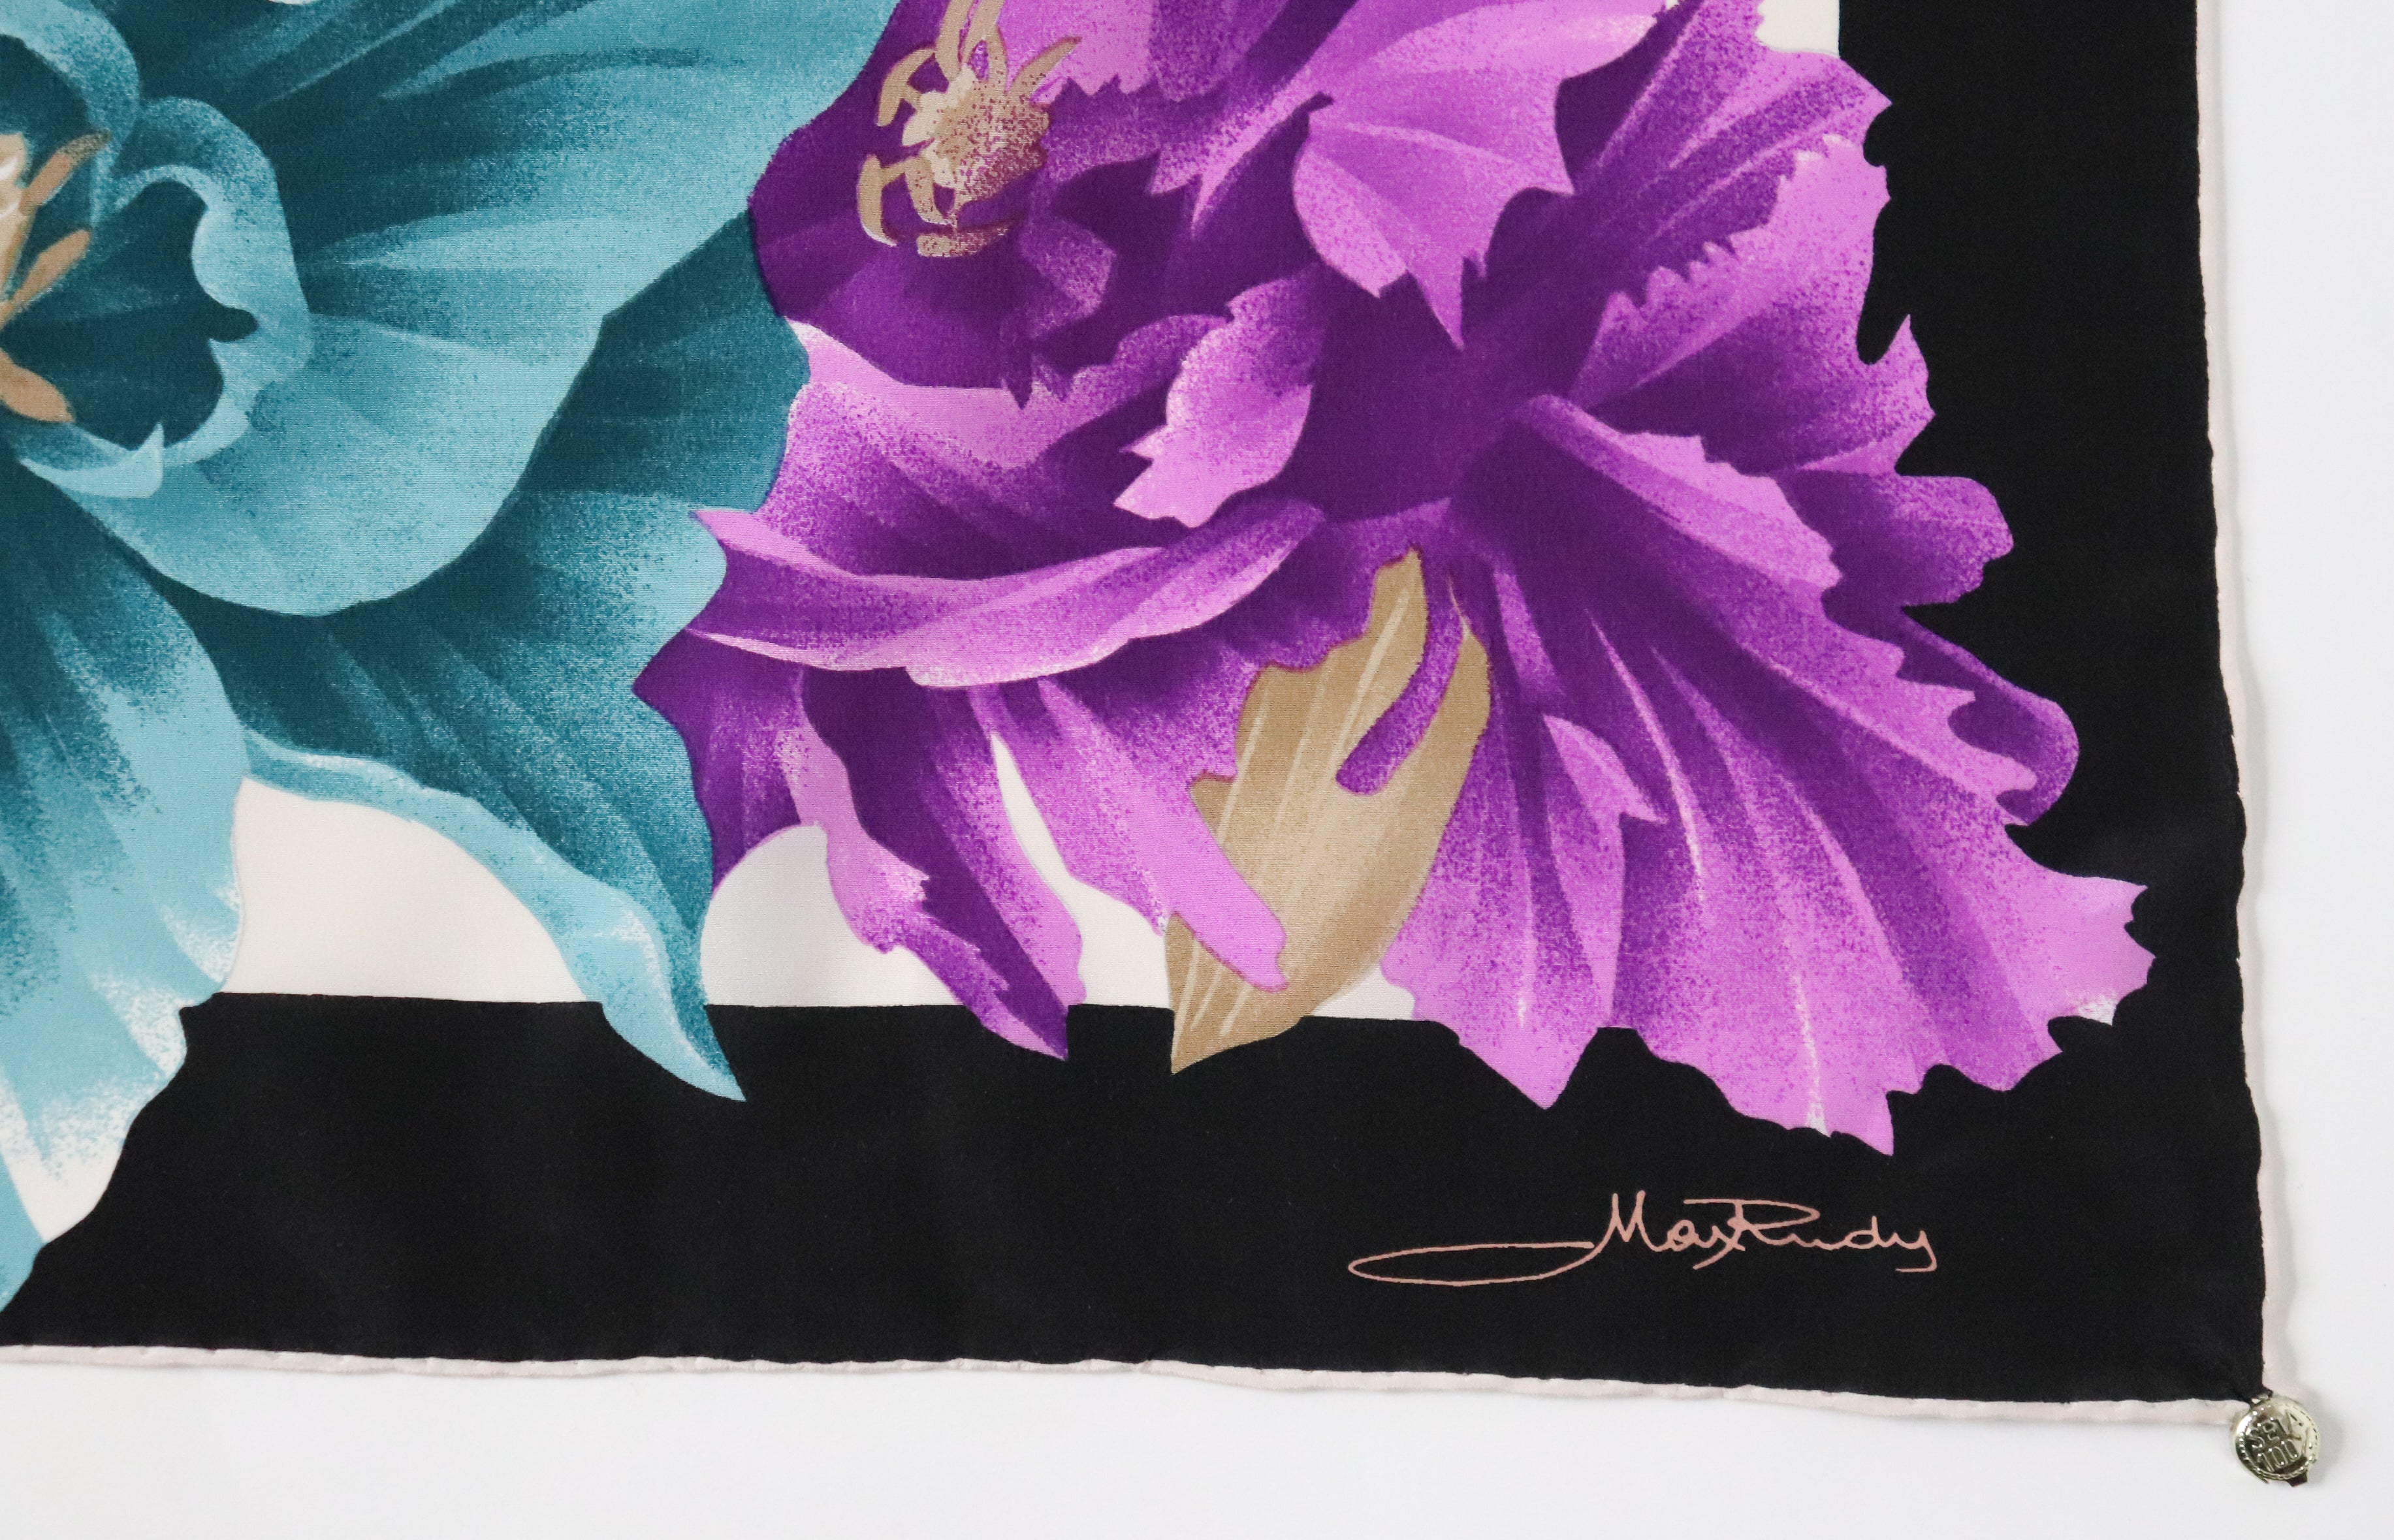 Max Rudy Floral Silk Scarf - Purple / Blue / Black - Vintage 1980s -  LARGE